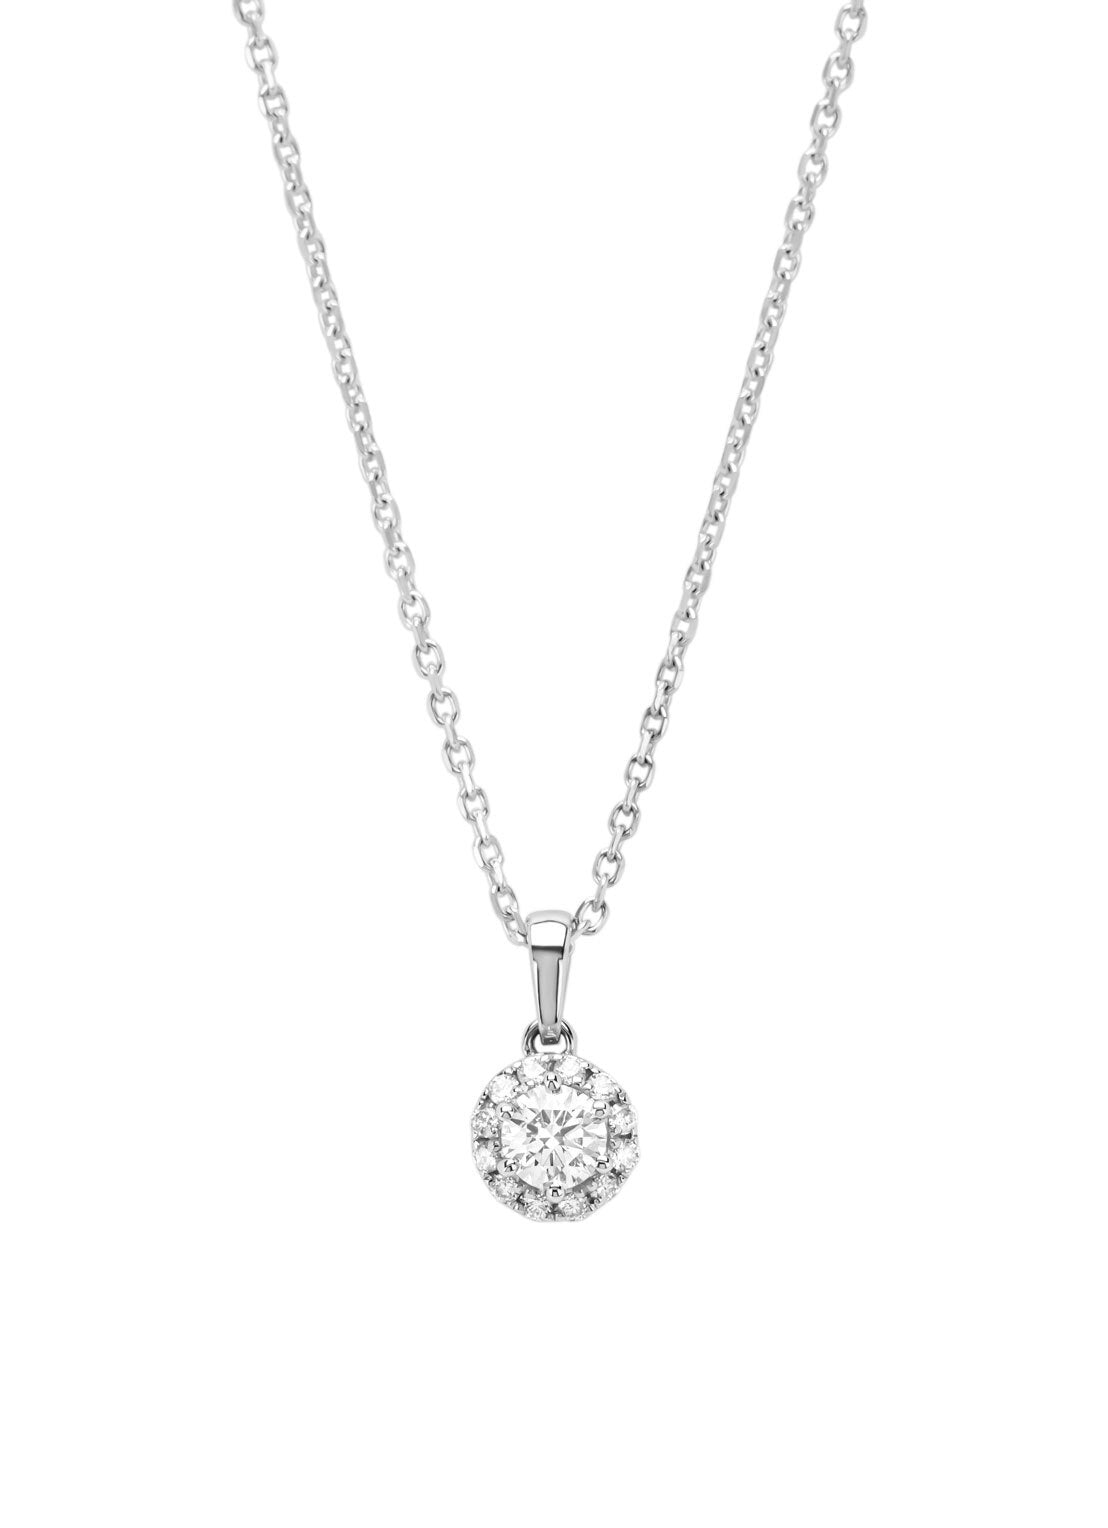 White gold necklace, 0.28 CT Diamant, Starlight